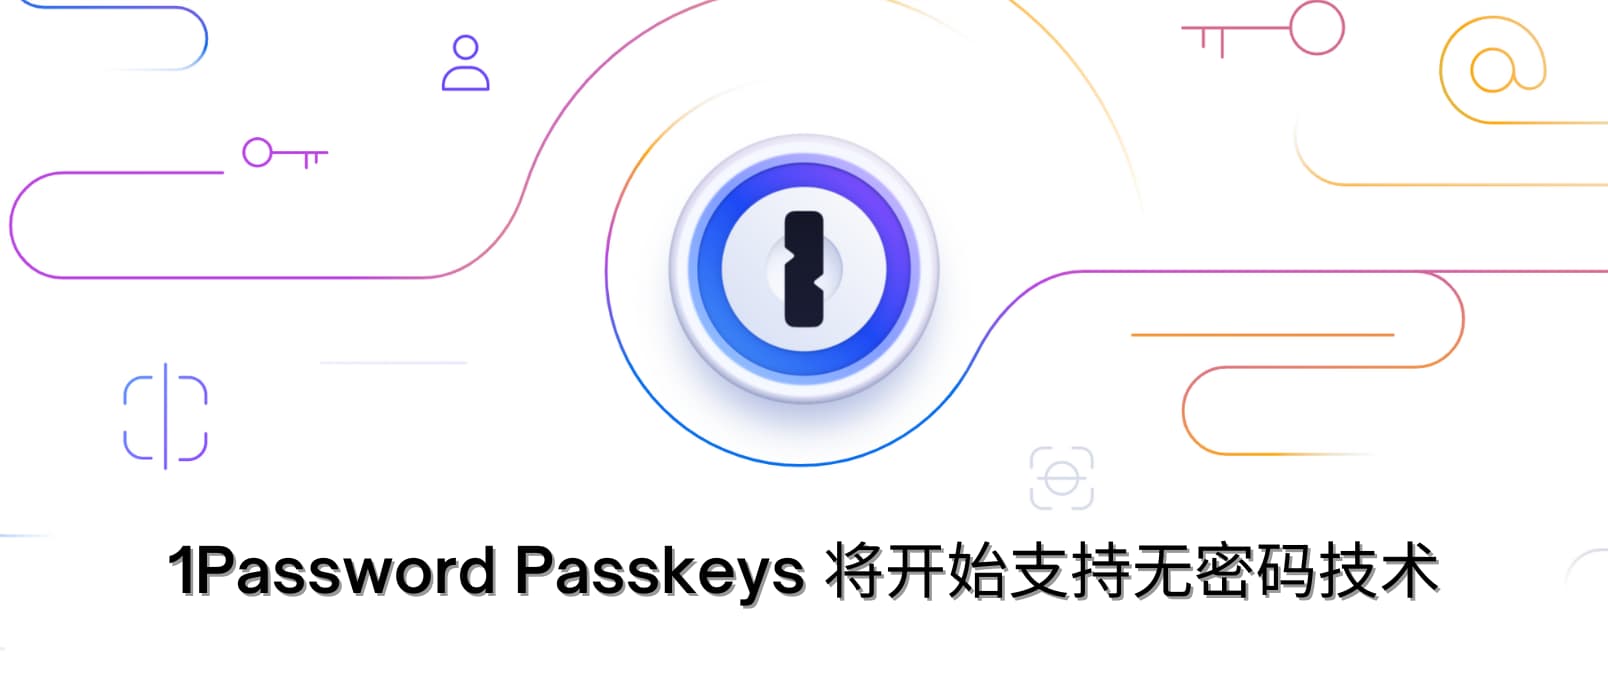 1Password Passkeys 将在 2023 年初开始支持无密码技术